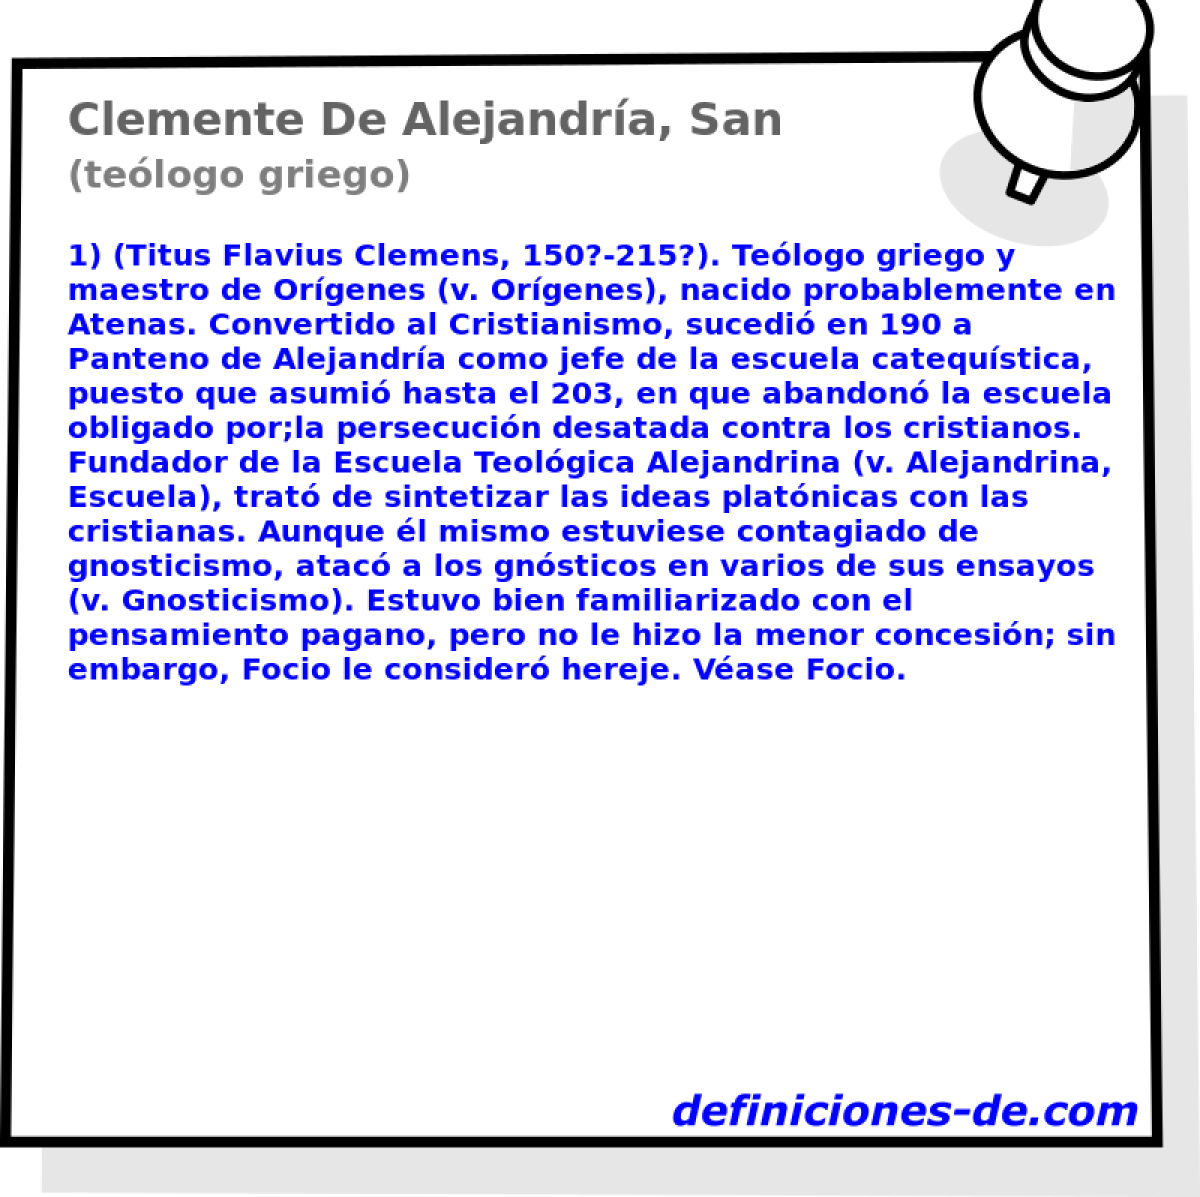 Clemente De Alejandra, San (telogo griego)